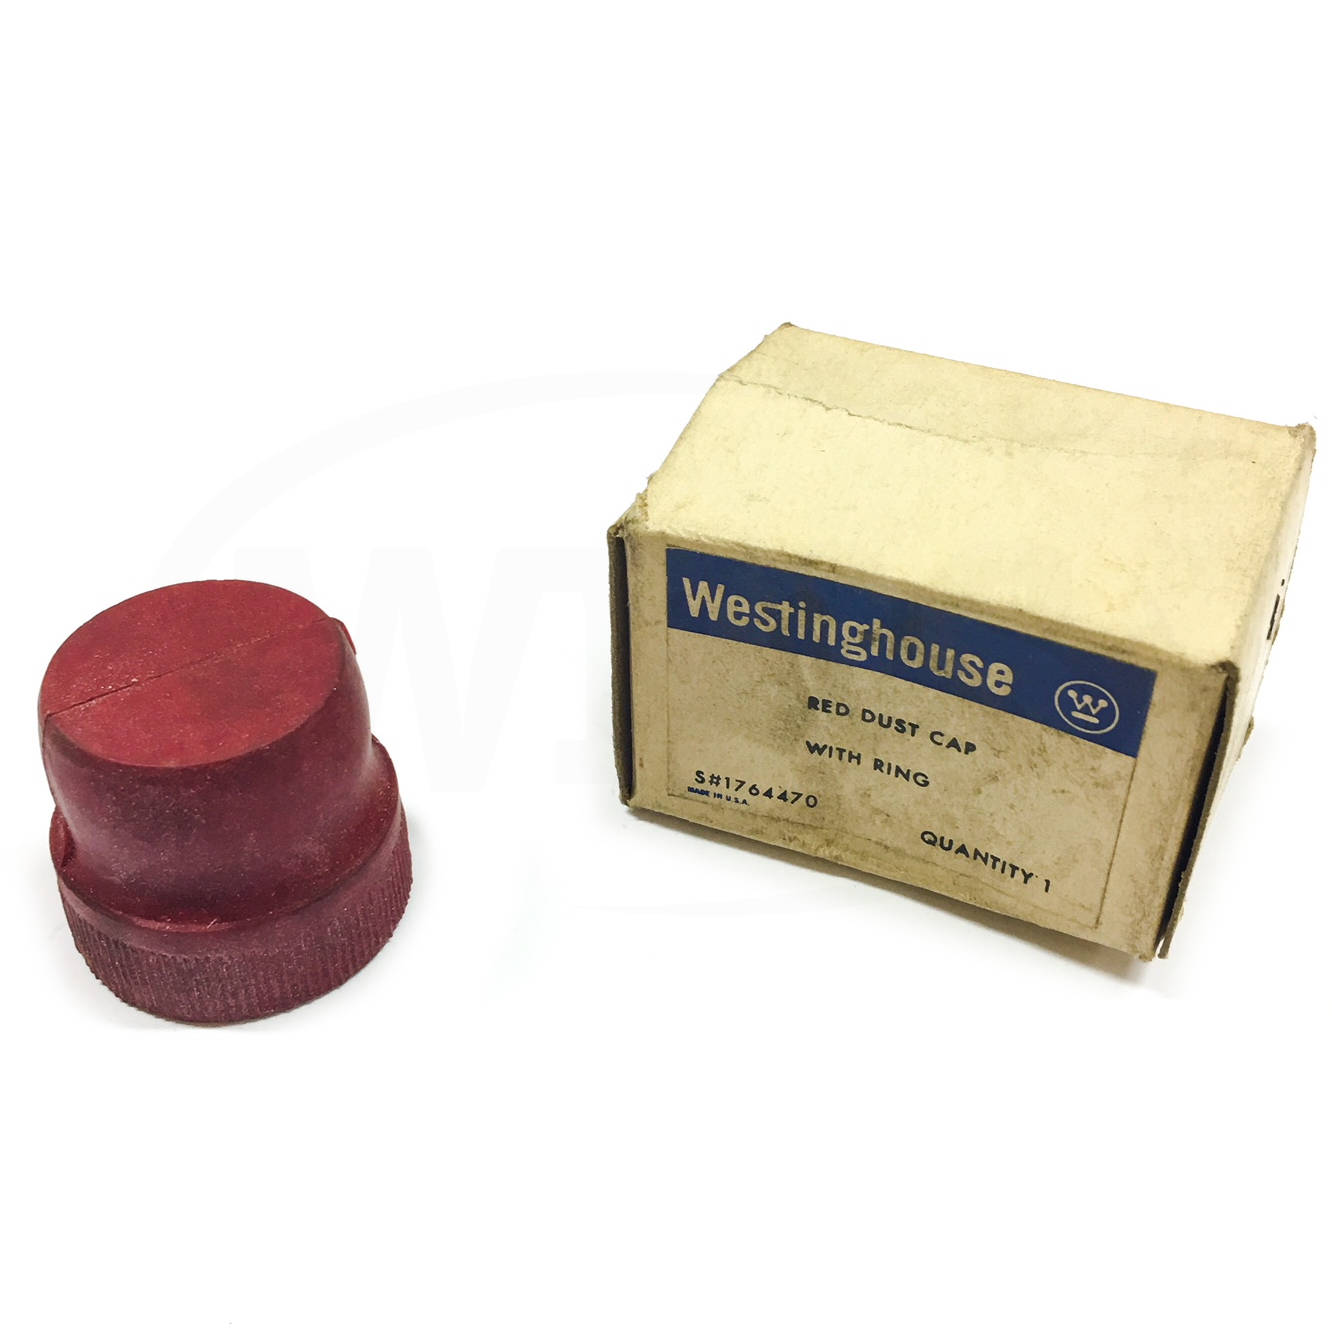 1764470 Westinghouse Red Dust Cap 1